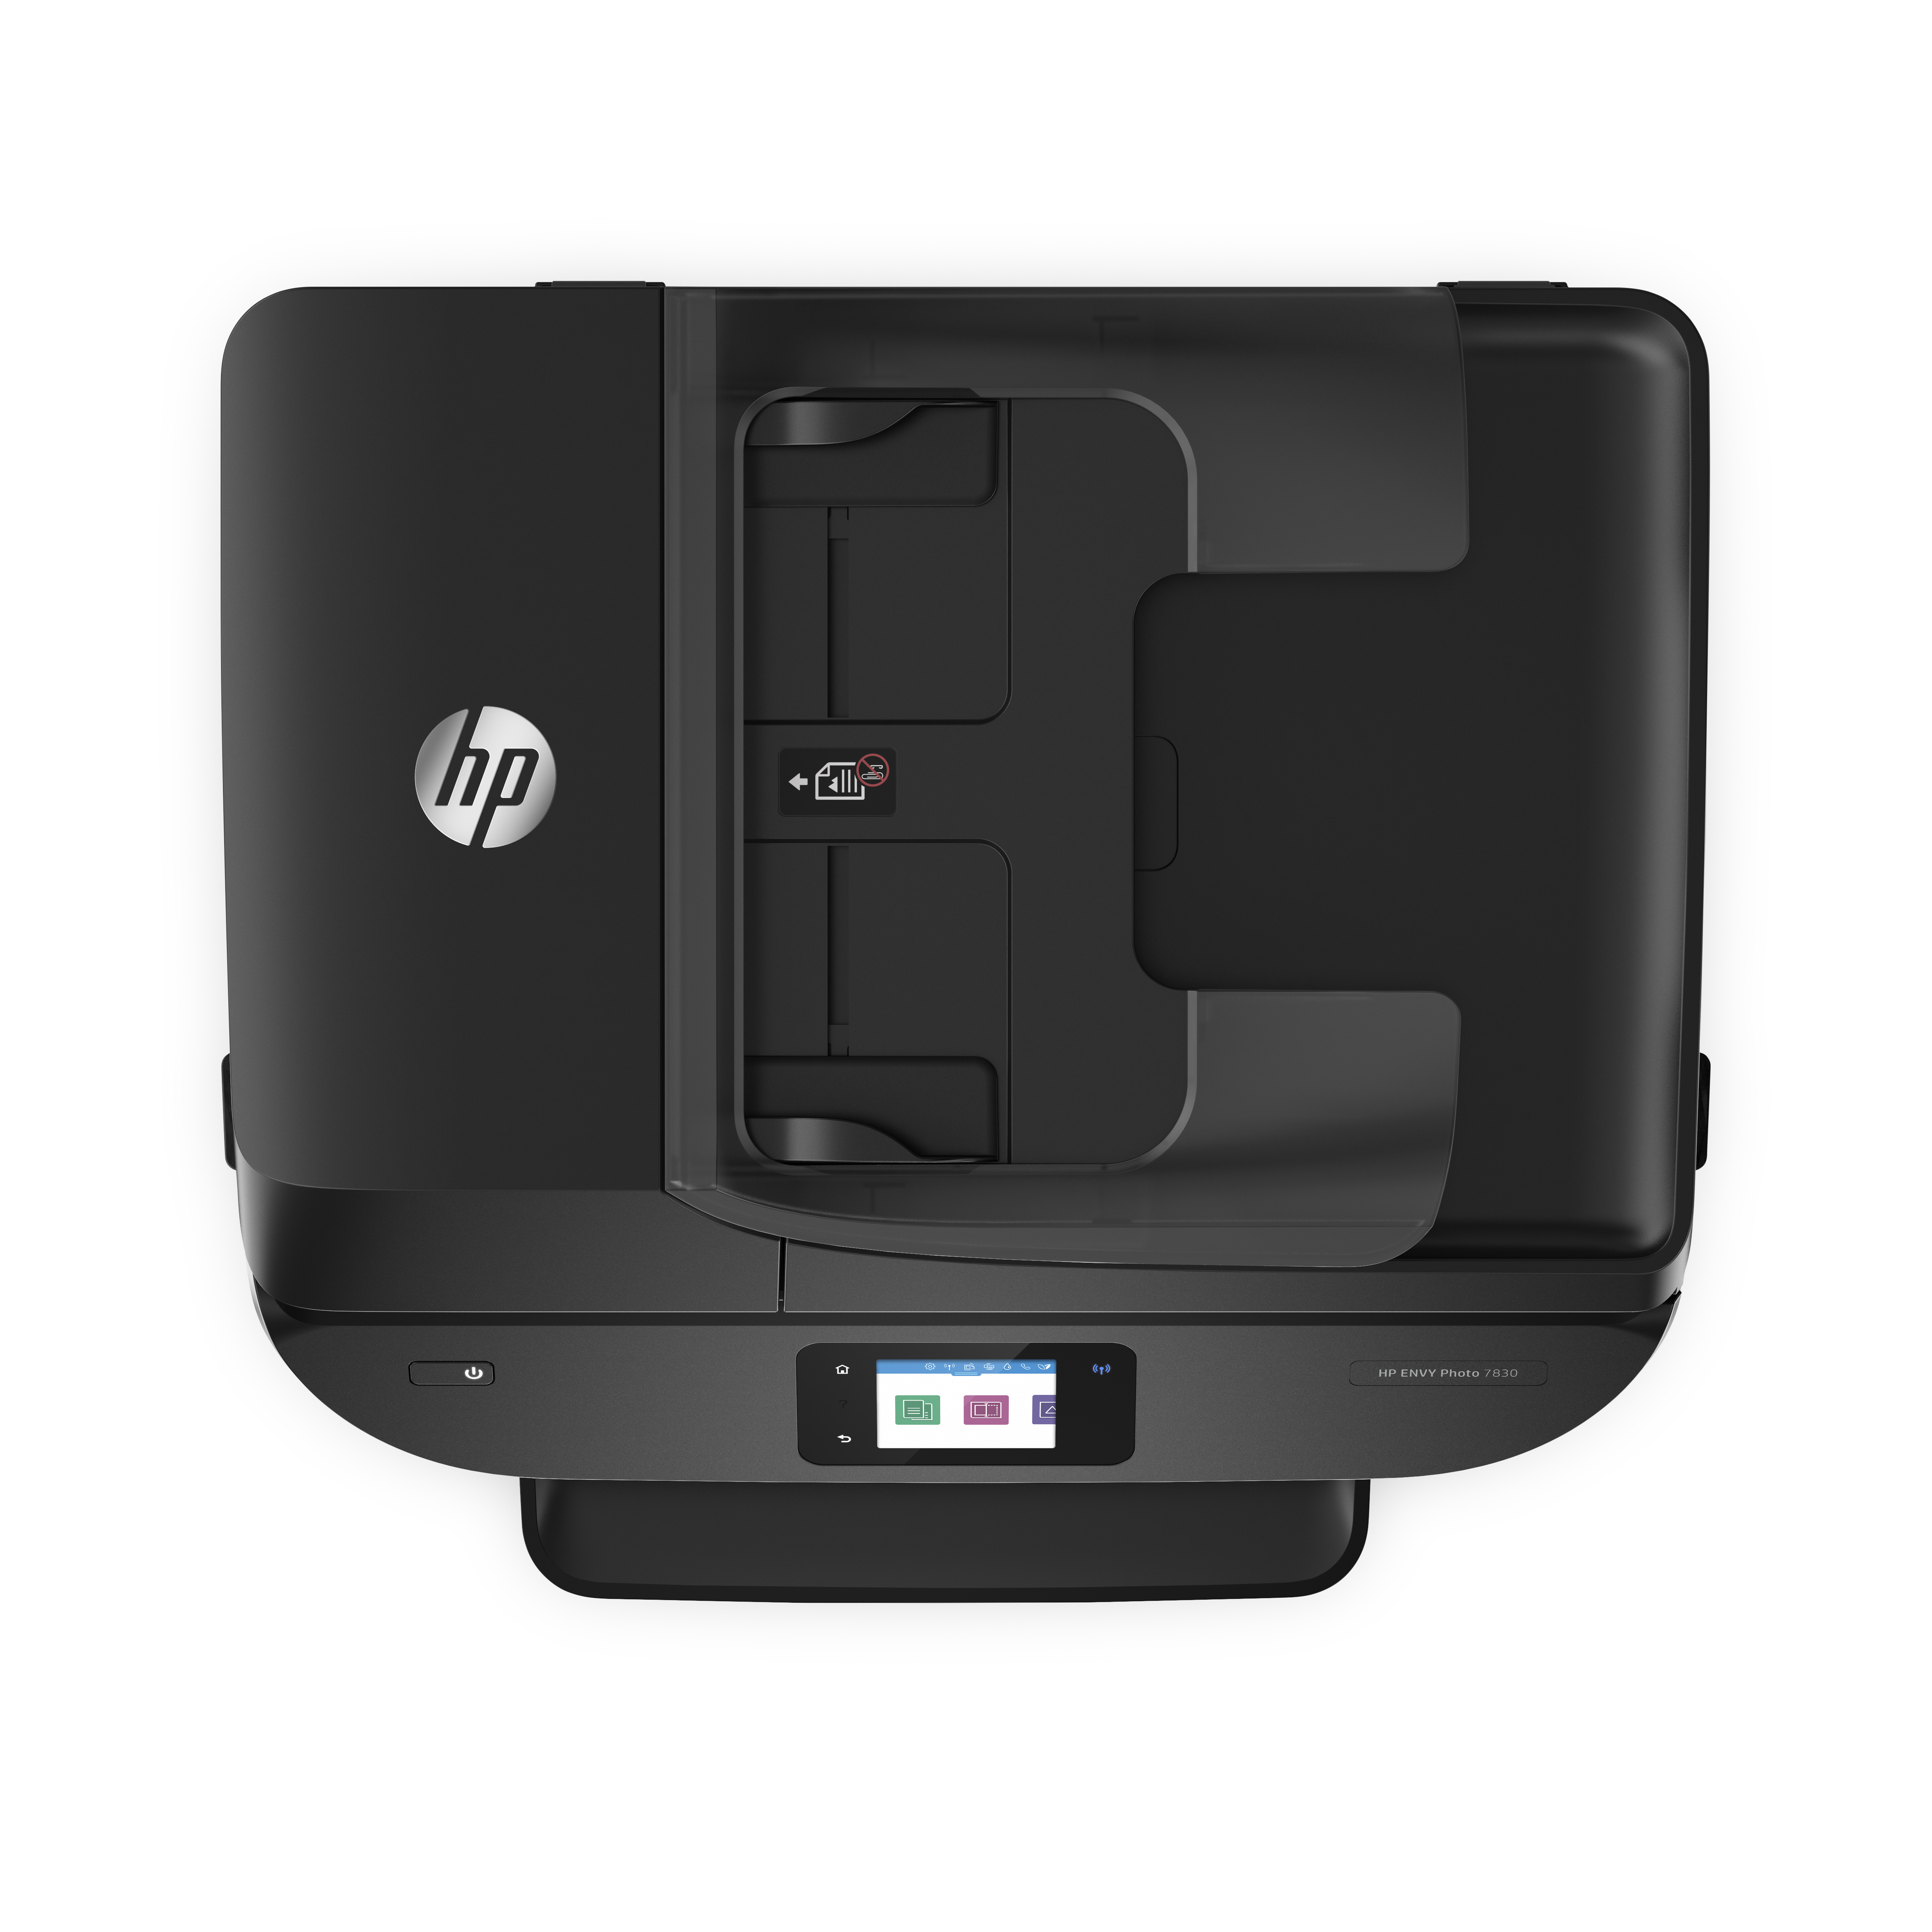 HP ENVY Photo 7830 WLAN Inkjet Ink) Netzwerkfähig Multifunktionsdrucker (Instant Thermal 4-in-1